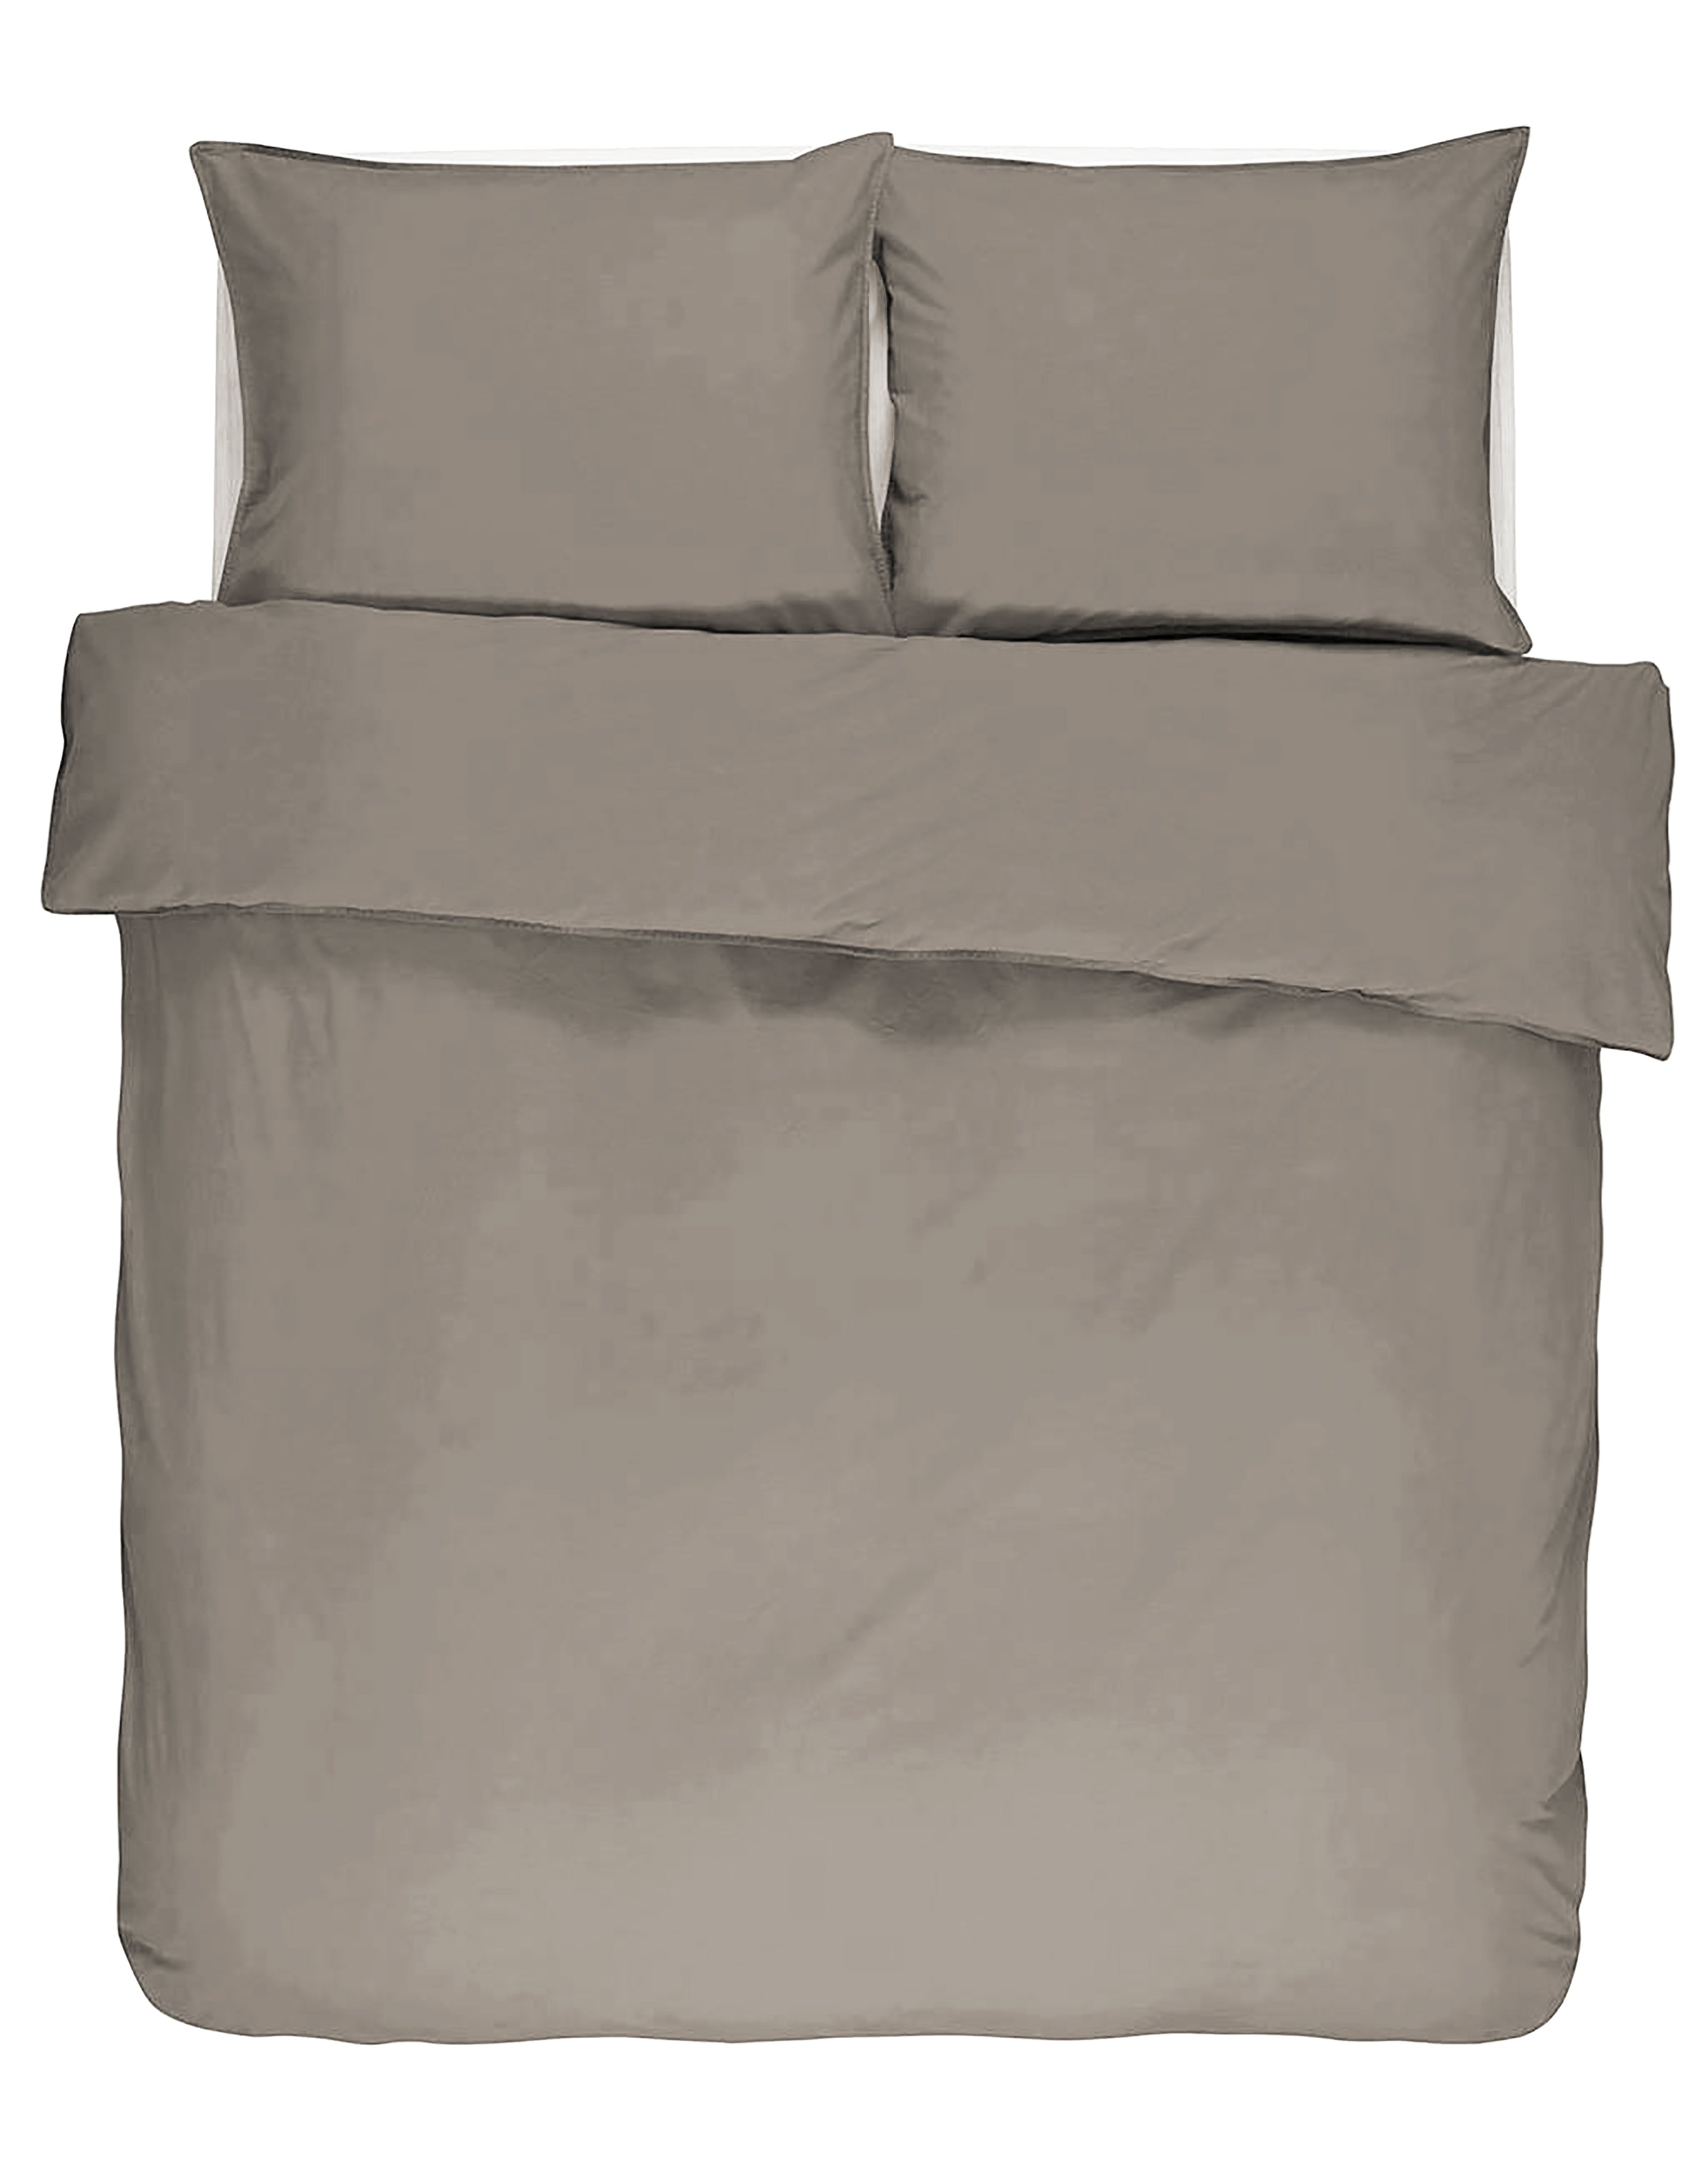 Duvet cover  IRIS, Stone washed uni cotton, 240x220, taupe